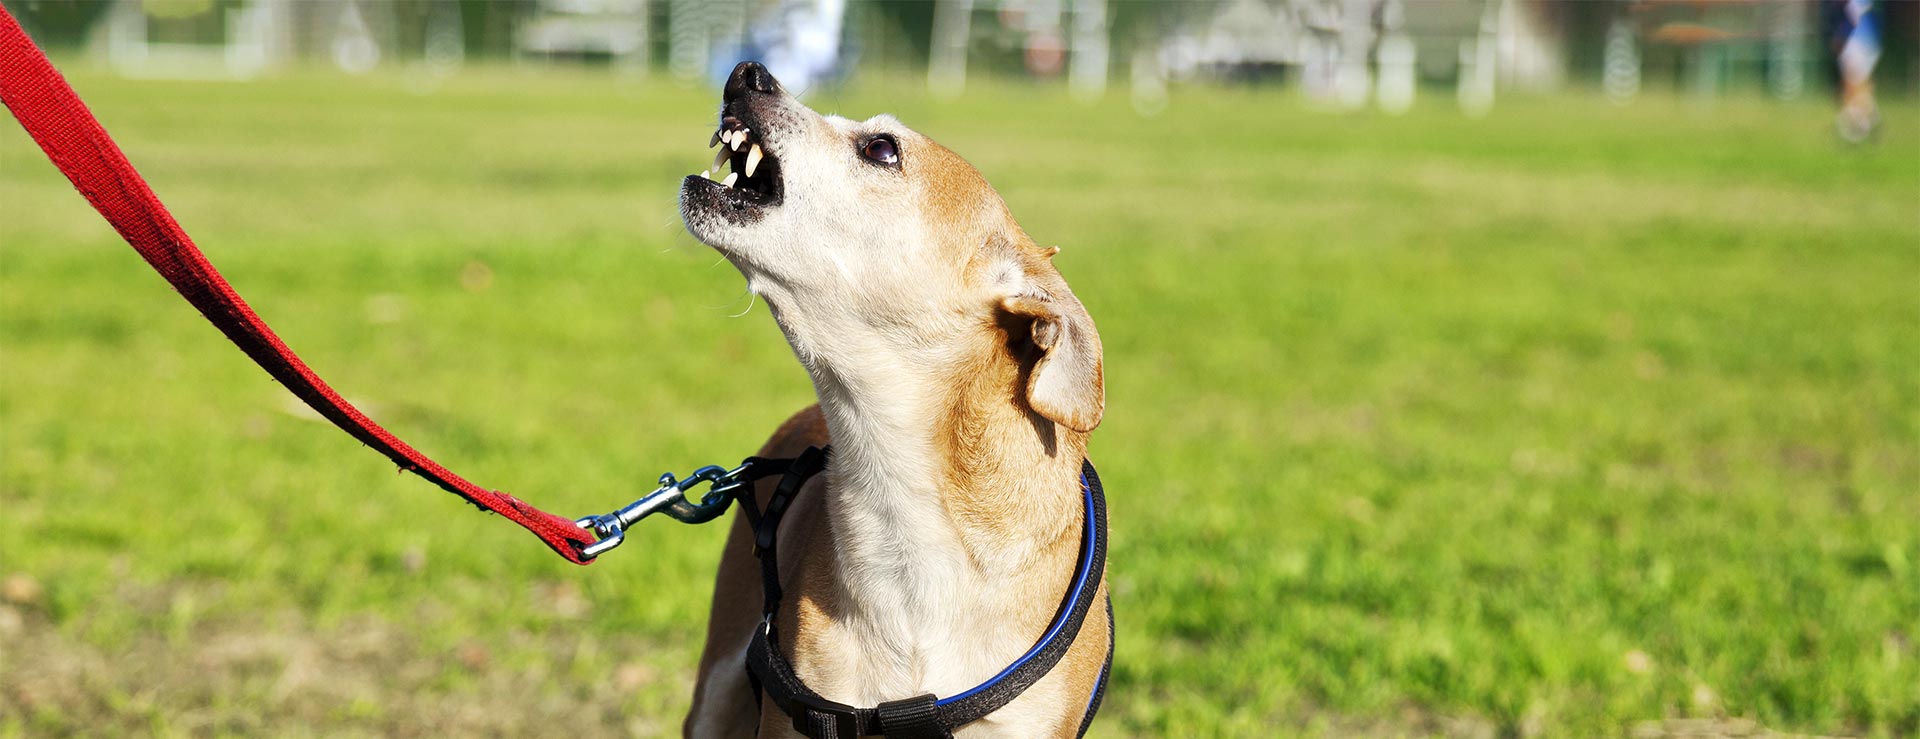 leash reactive dog training